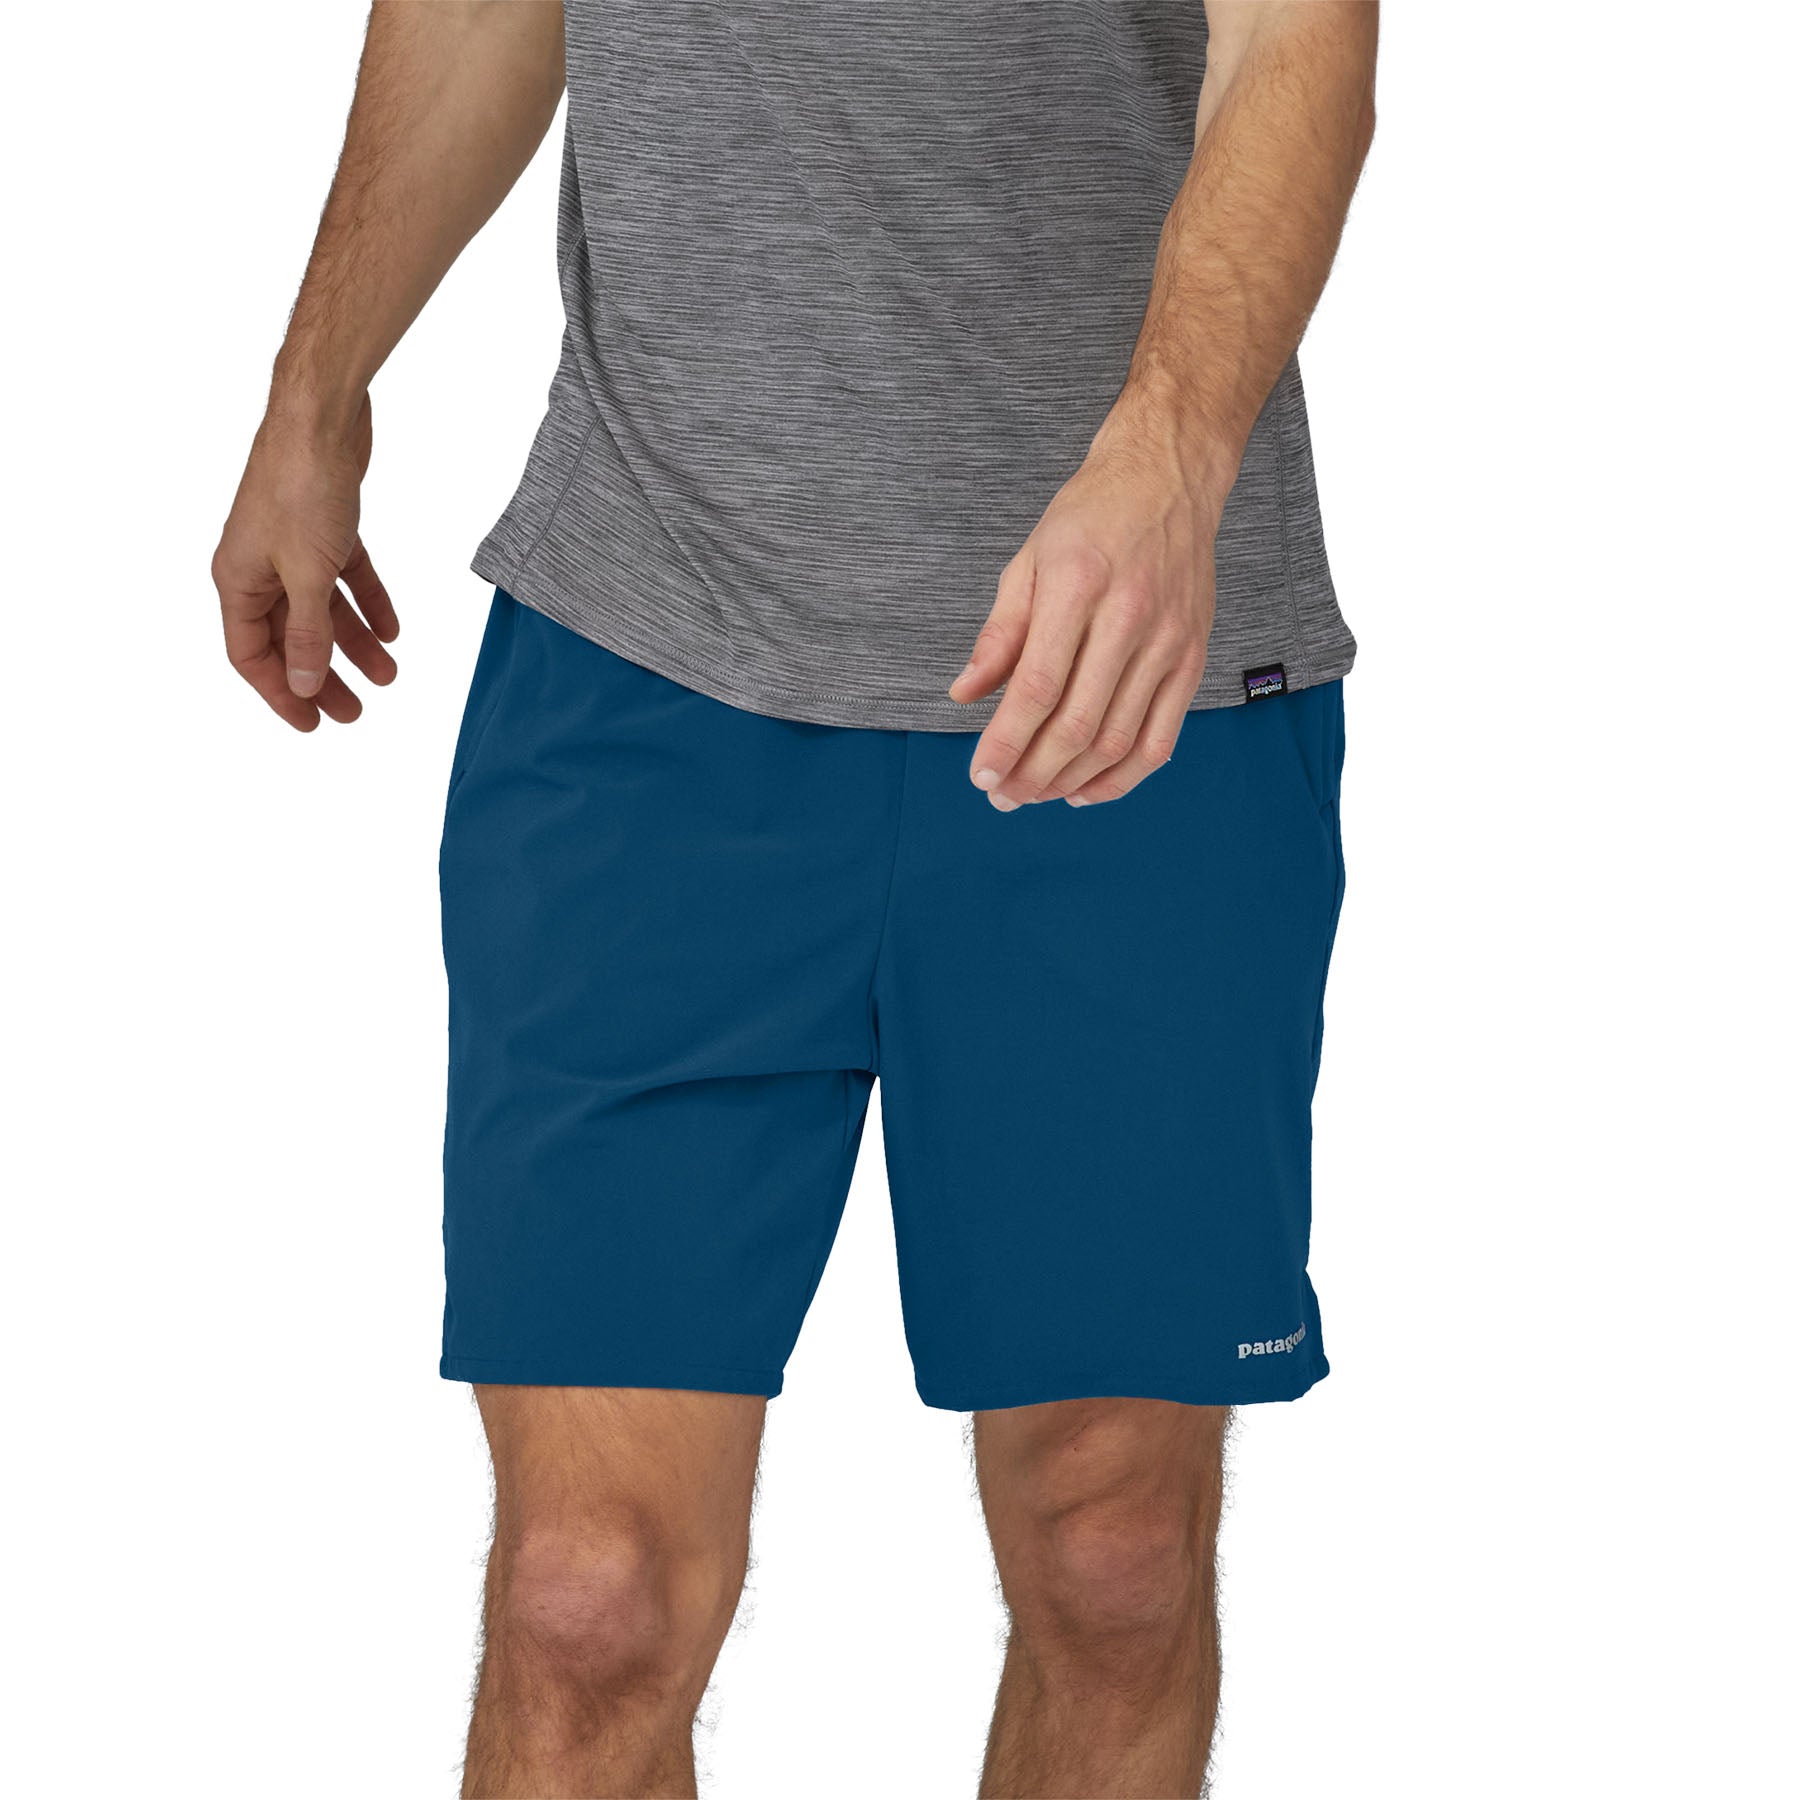 Men's Multi Trails Shorts - 8"